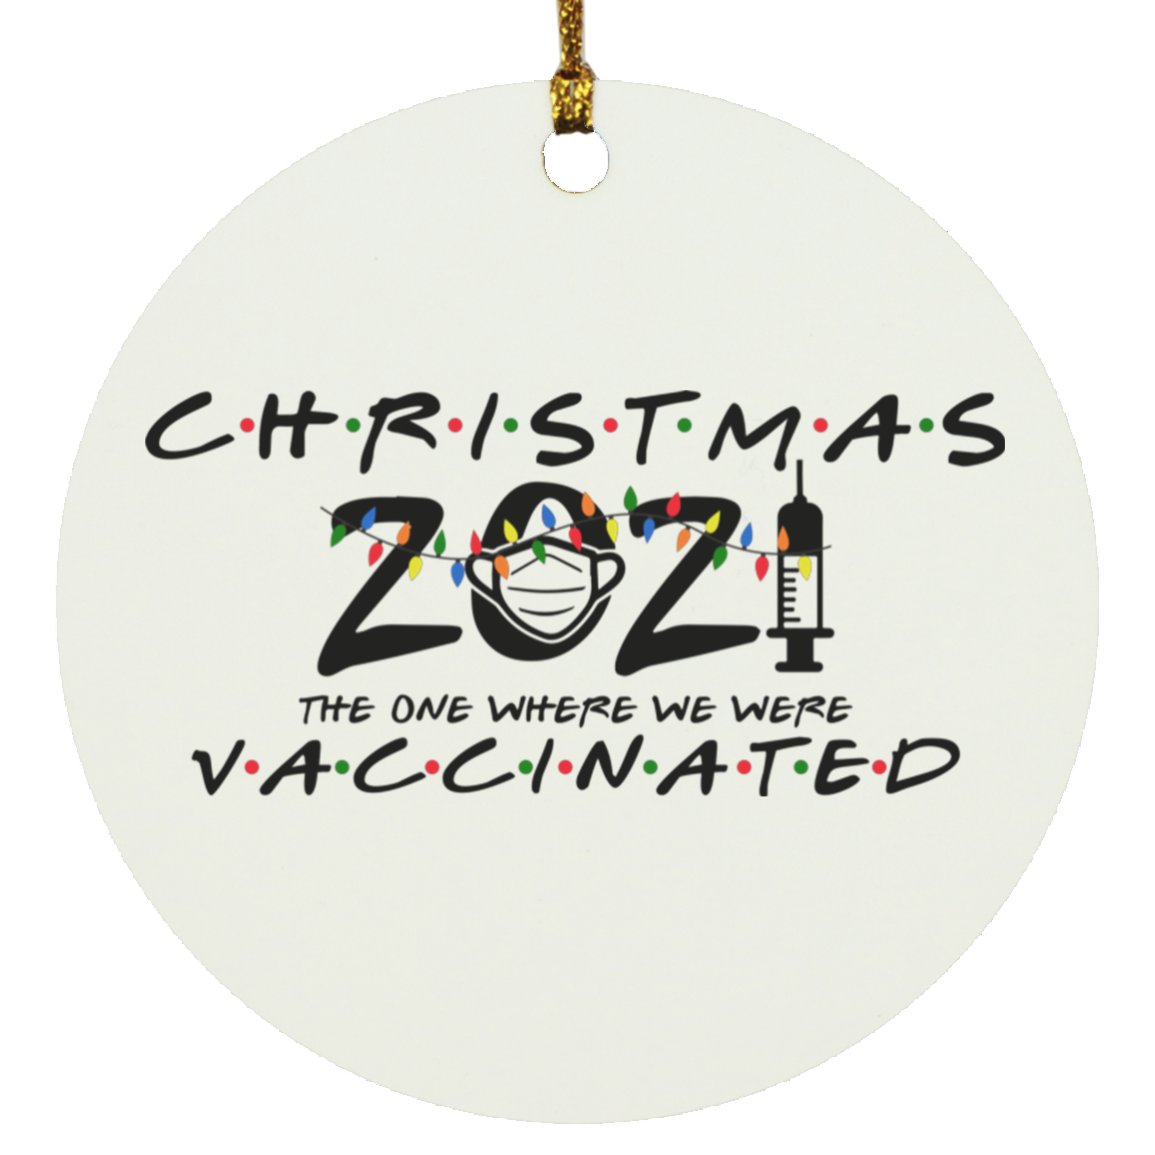 2021 Vaccinated Circle Ornament